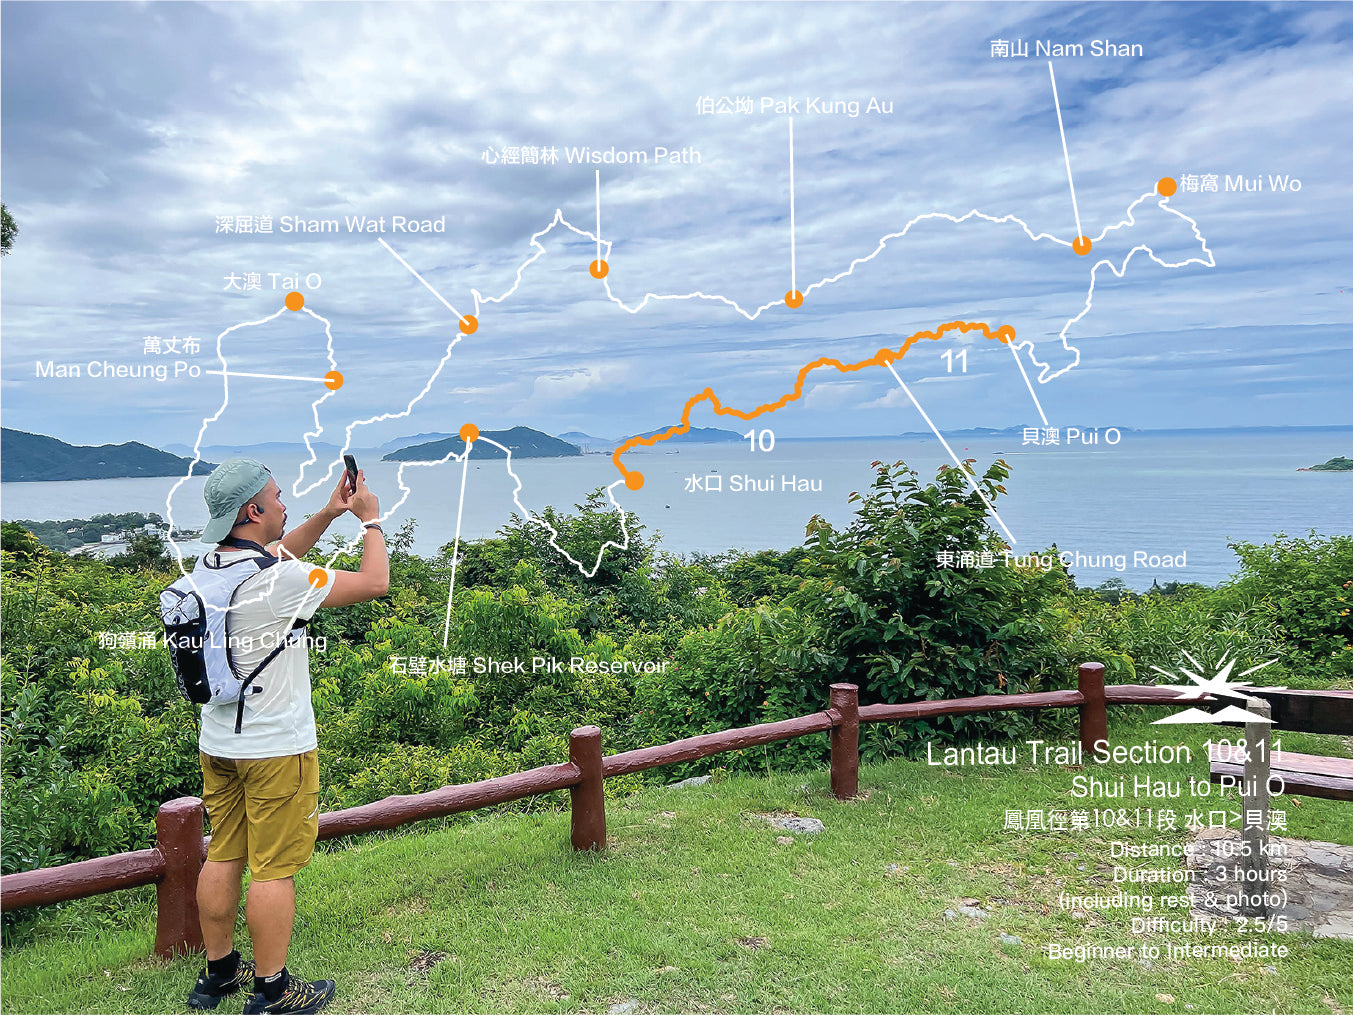 Lantau Trail Section 10&11 | Shui Hau to Pui O